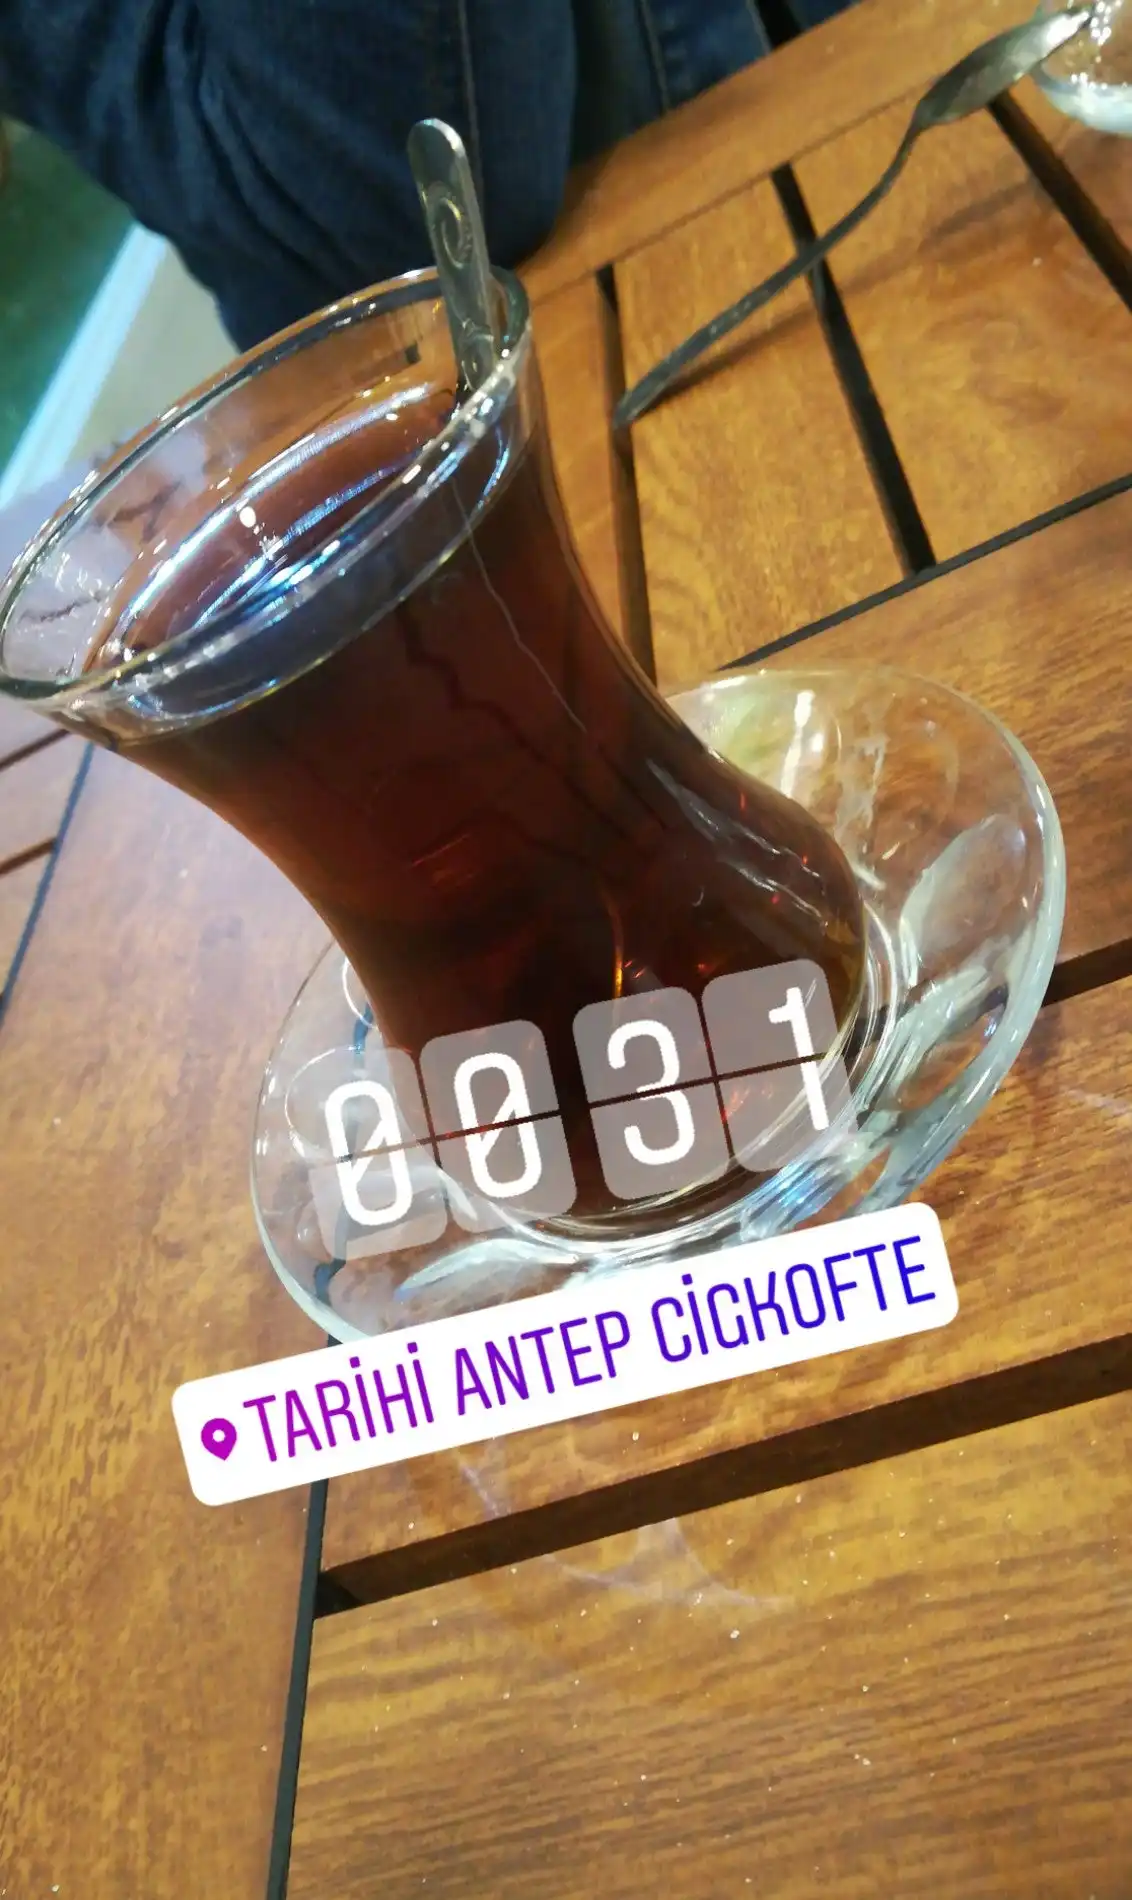 Antep Cigkofte Ömer Bey Cafe